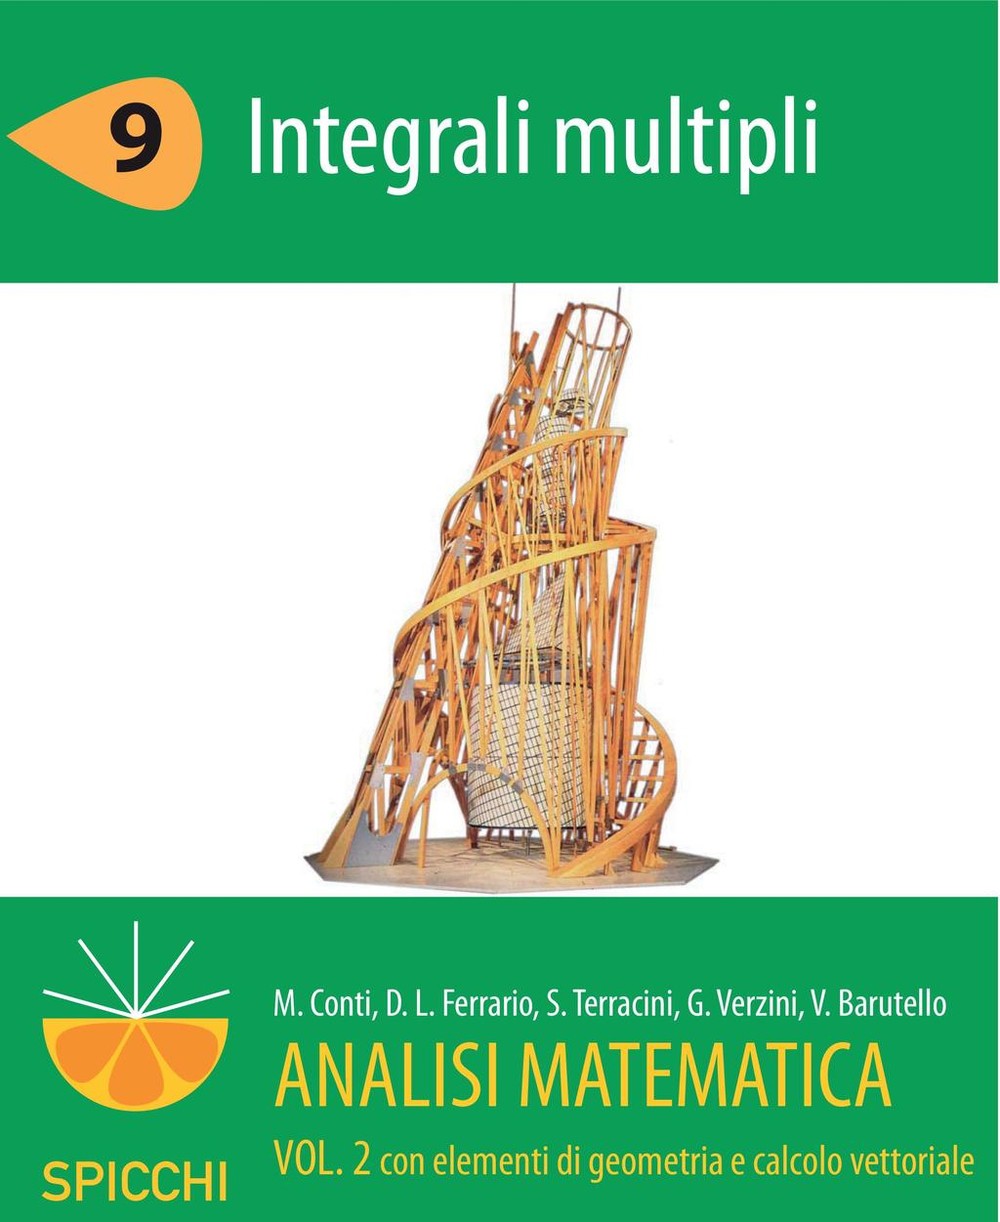 Analisi matematica II.9 Integrali multipli (PDF - Spicchi) - Librerie.coop